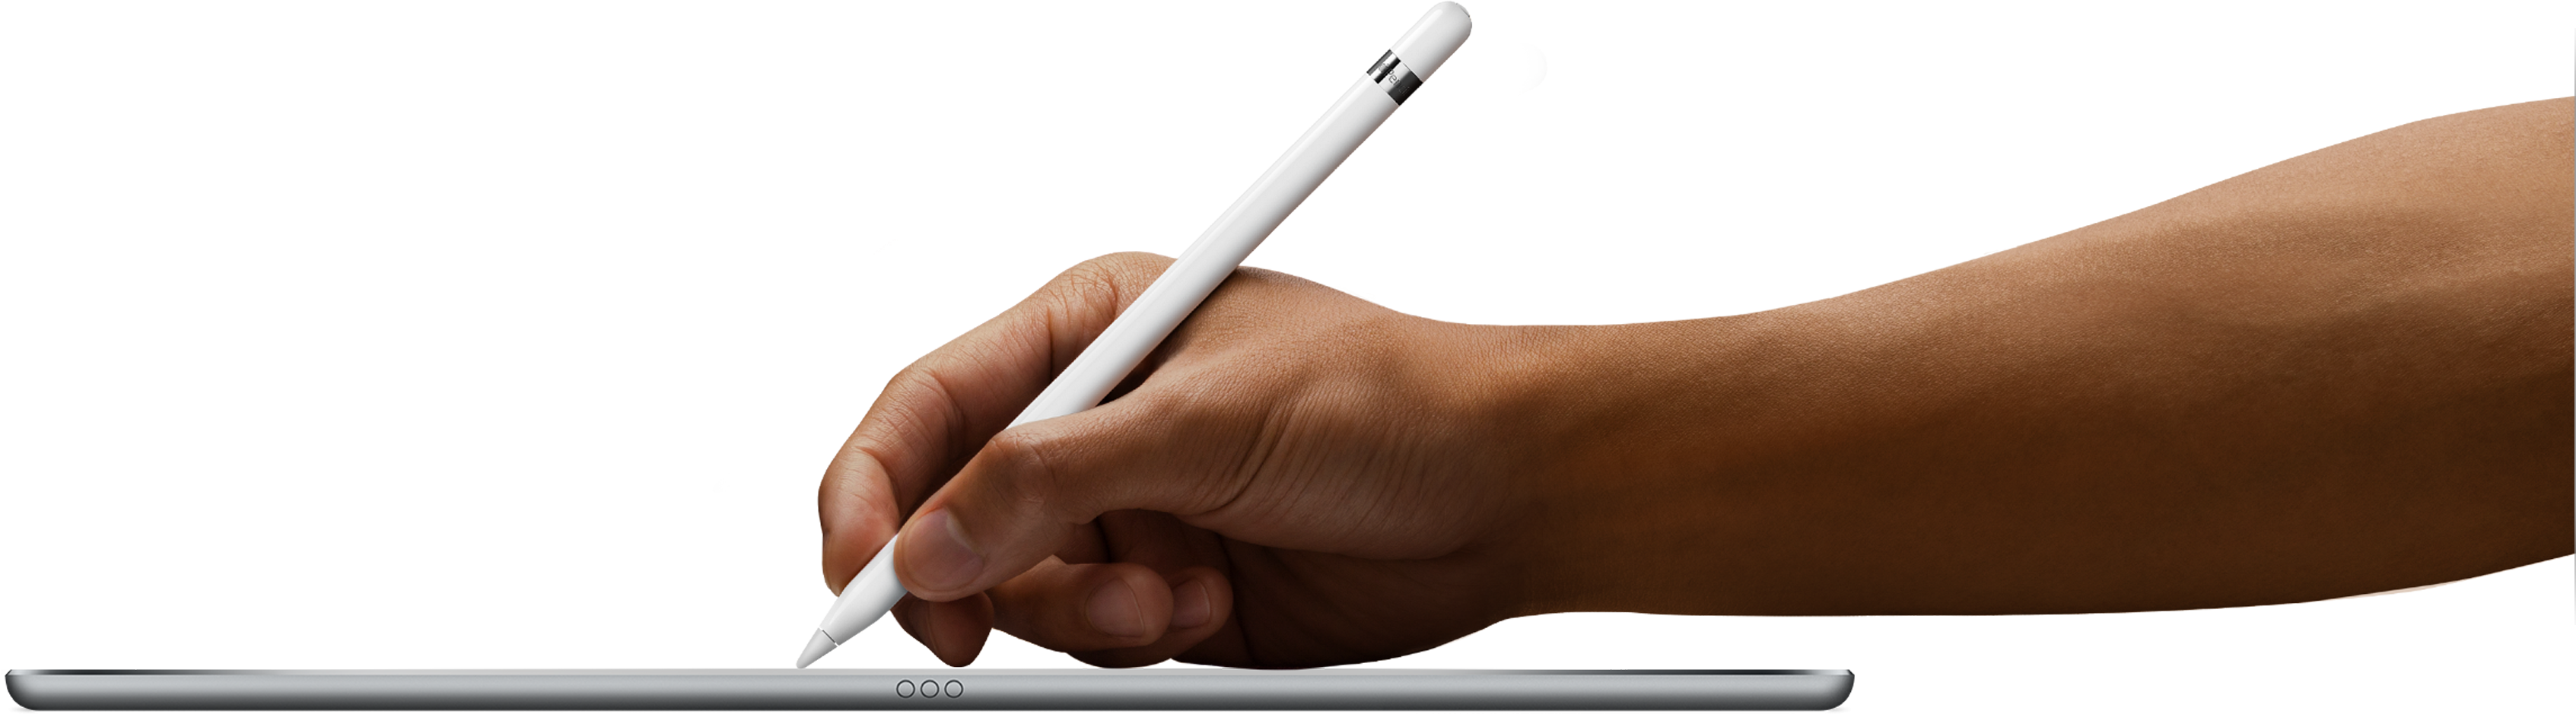 Apple-iPad-Pro-Pencil